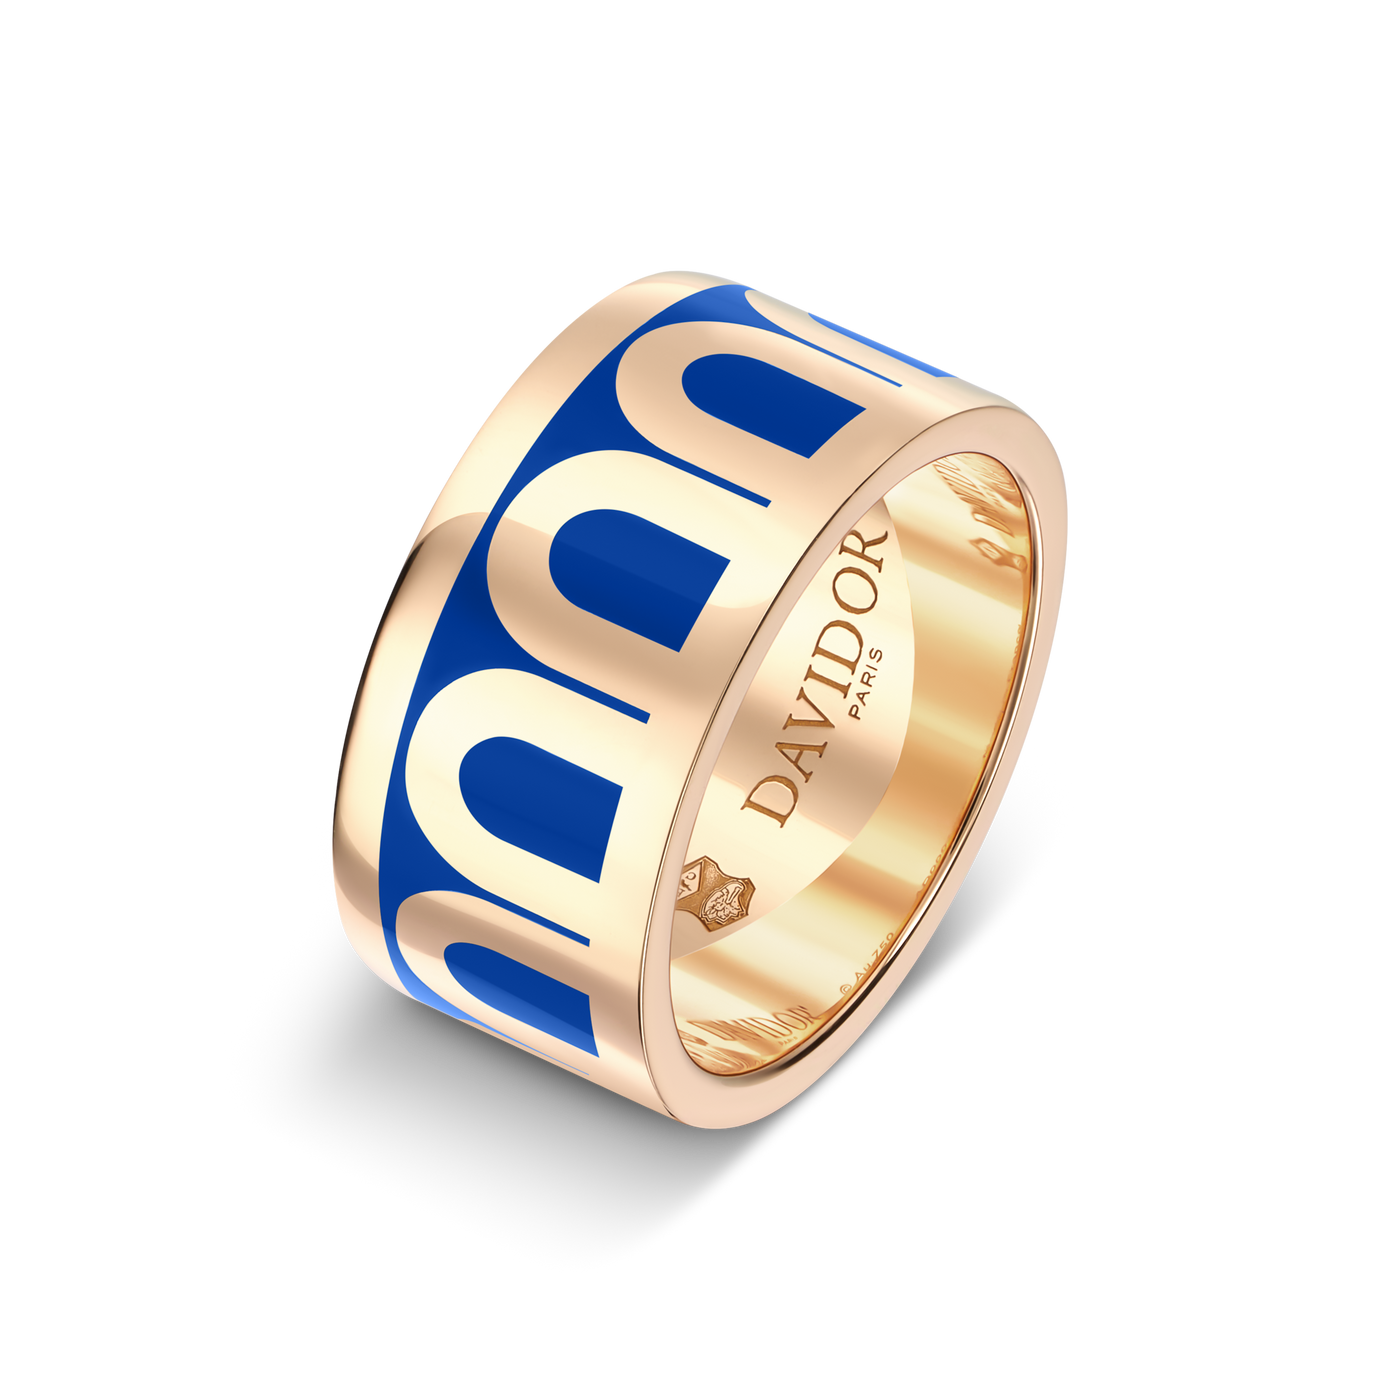 L'Arc de DAVIDOR Ring GM, 18k Rose Gold with Riviera Lacquered Ceramic - DAVIDOR